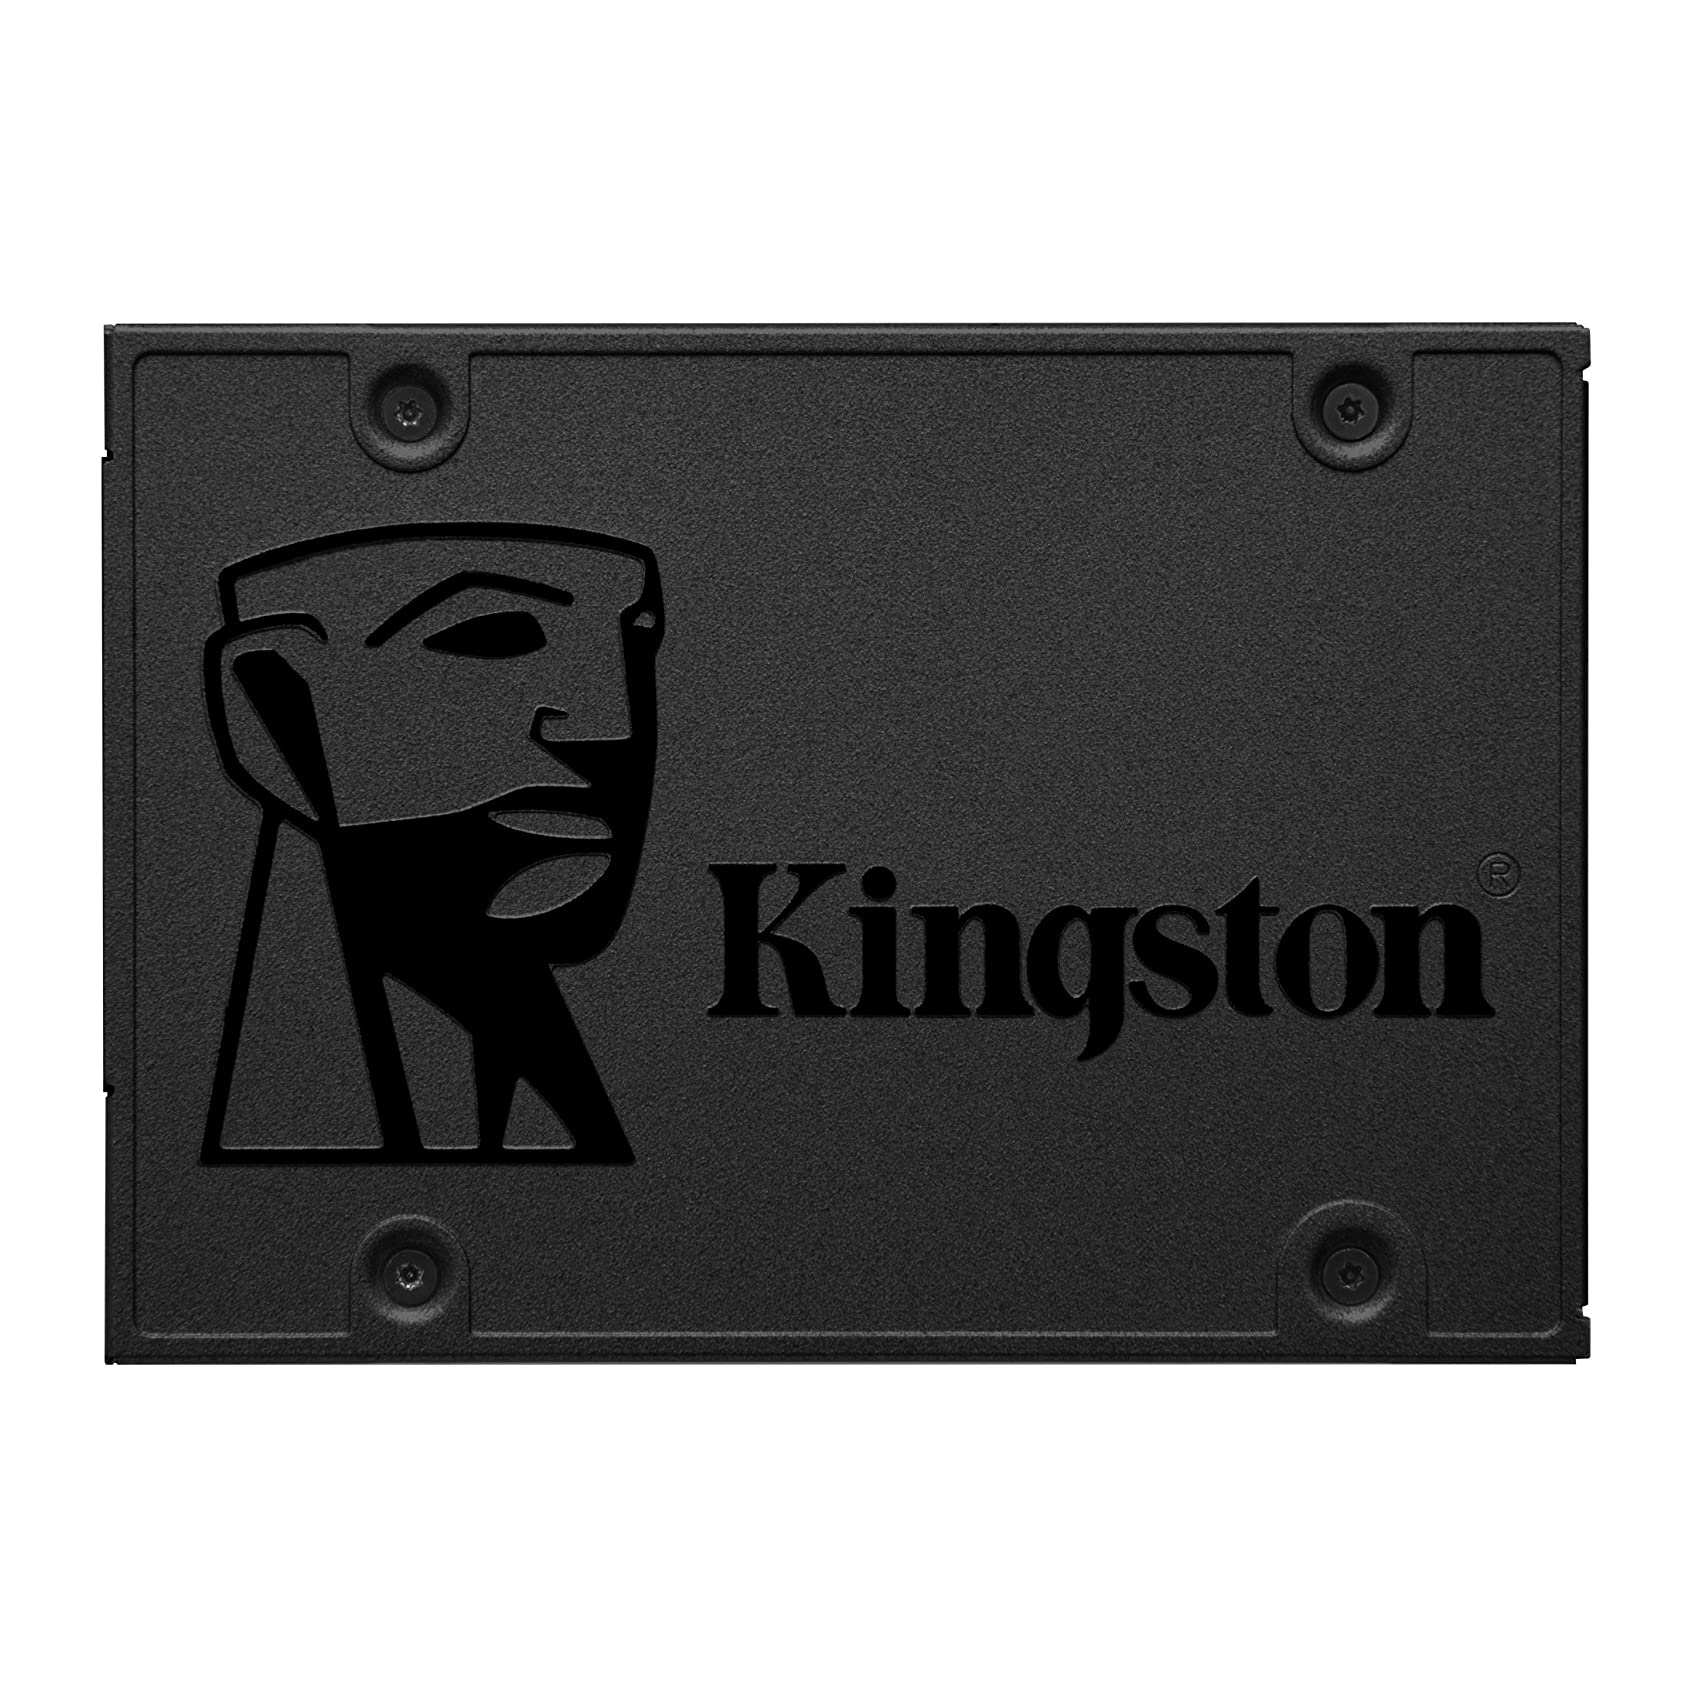 DISCO DURO KINGSTON SSD A400 FRONTAL PRINCIPAL